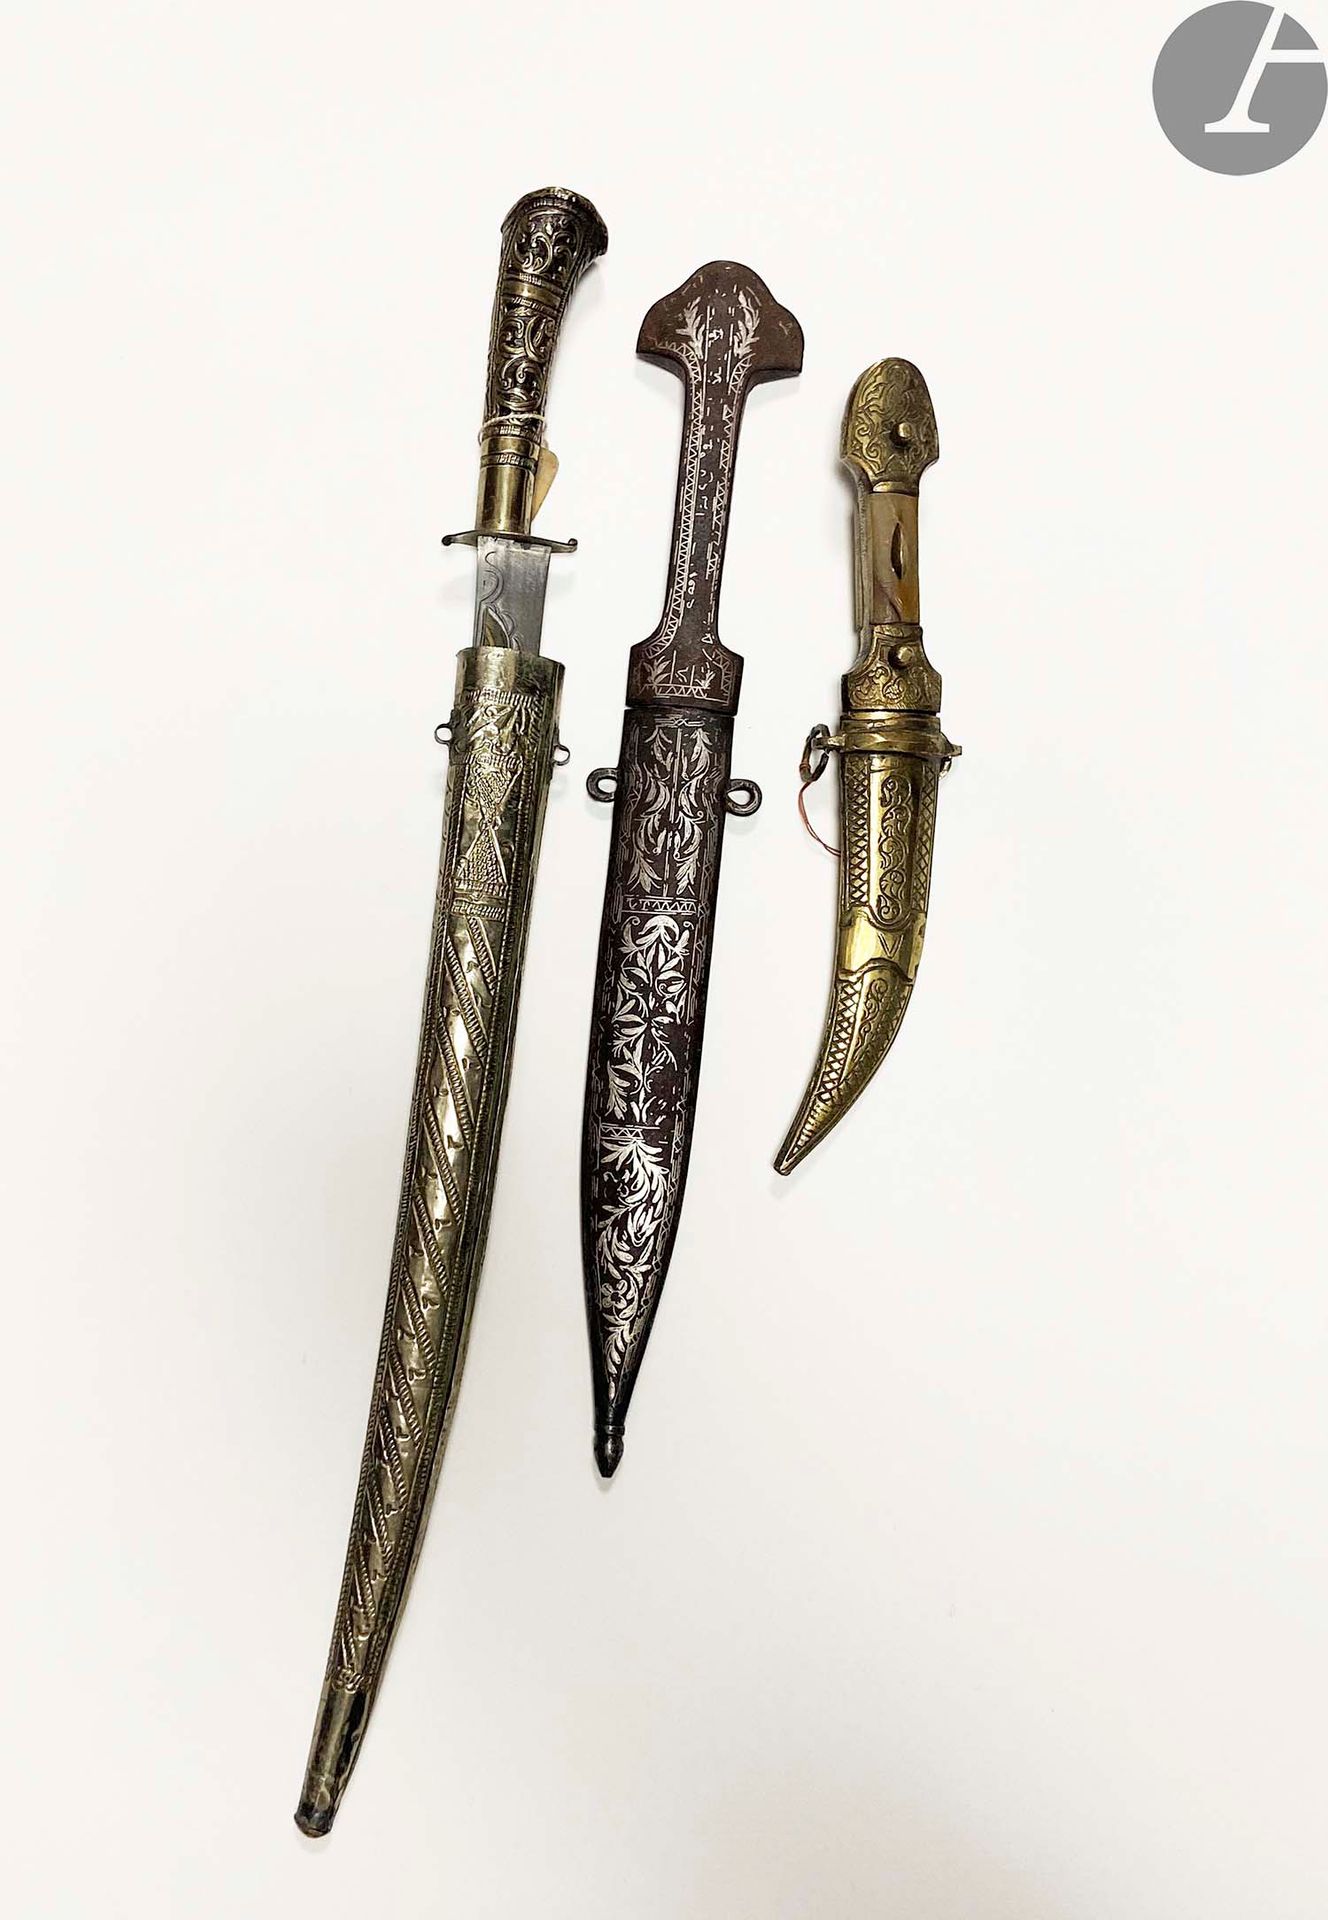 Null 三刃武器：
- 镶嵌银质装饰的金加尔式匕首。
- 黄铜和牛角的小匕首，叙利亚的纪念品。
- 来自北非的大型匕首，镀银配件。